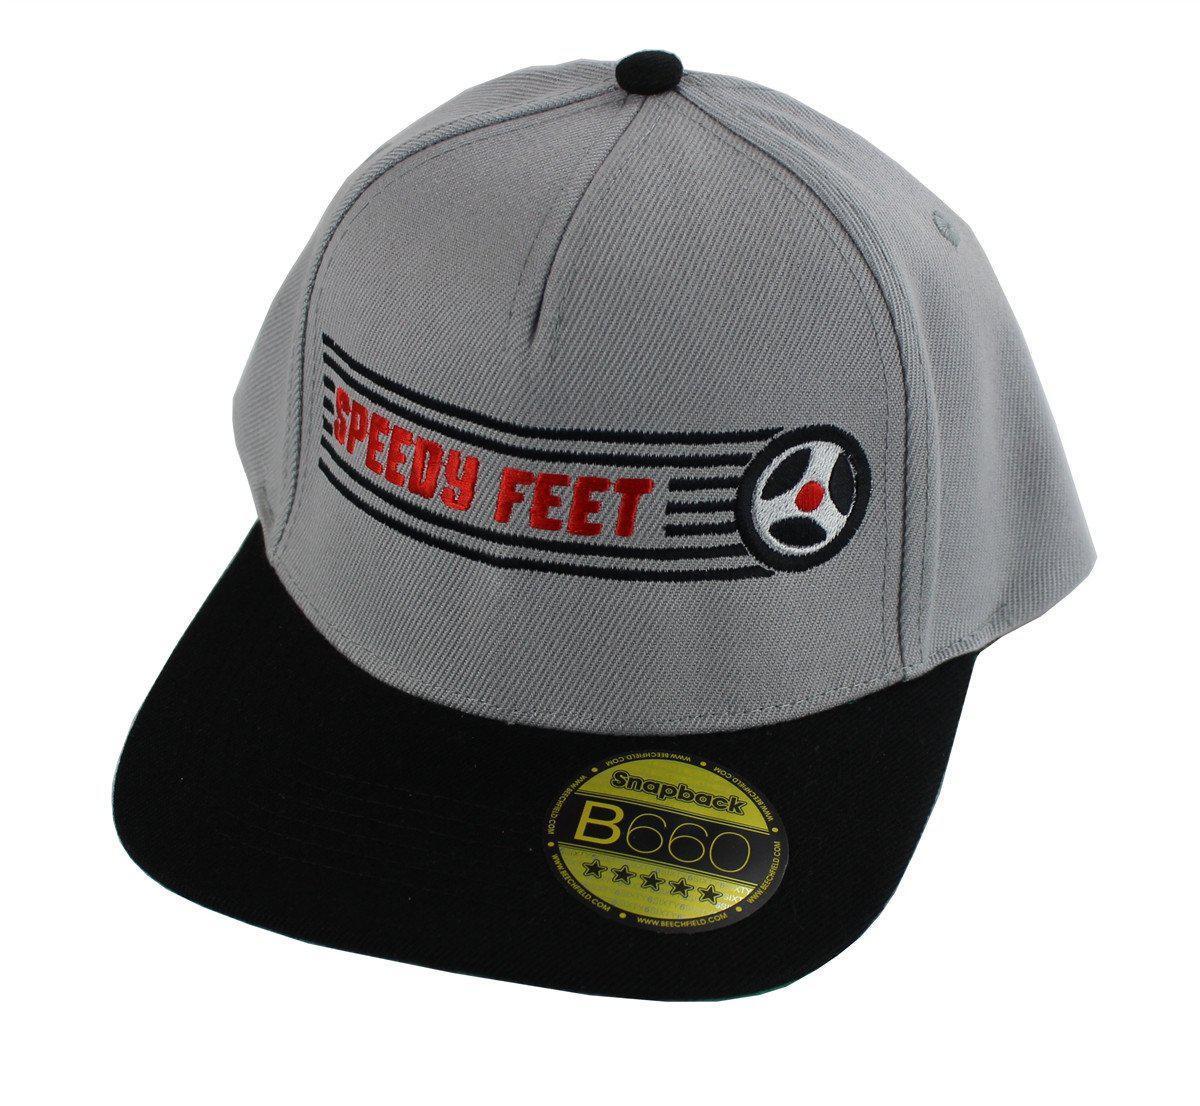 SpeedyFeet Snapback Cap - Grey with Black / Red Logo / Black wheel